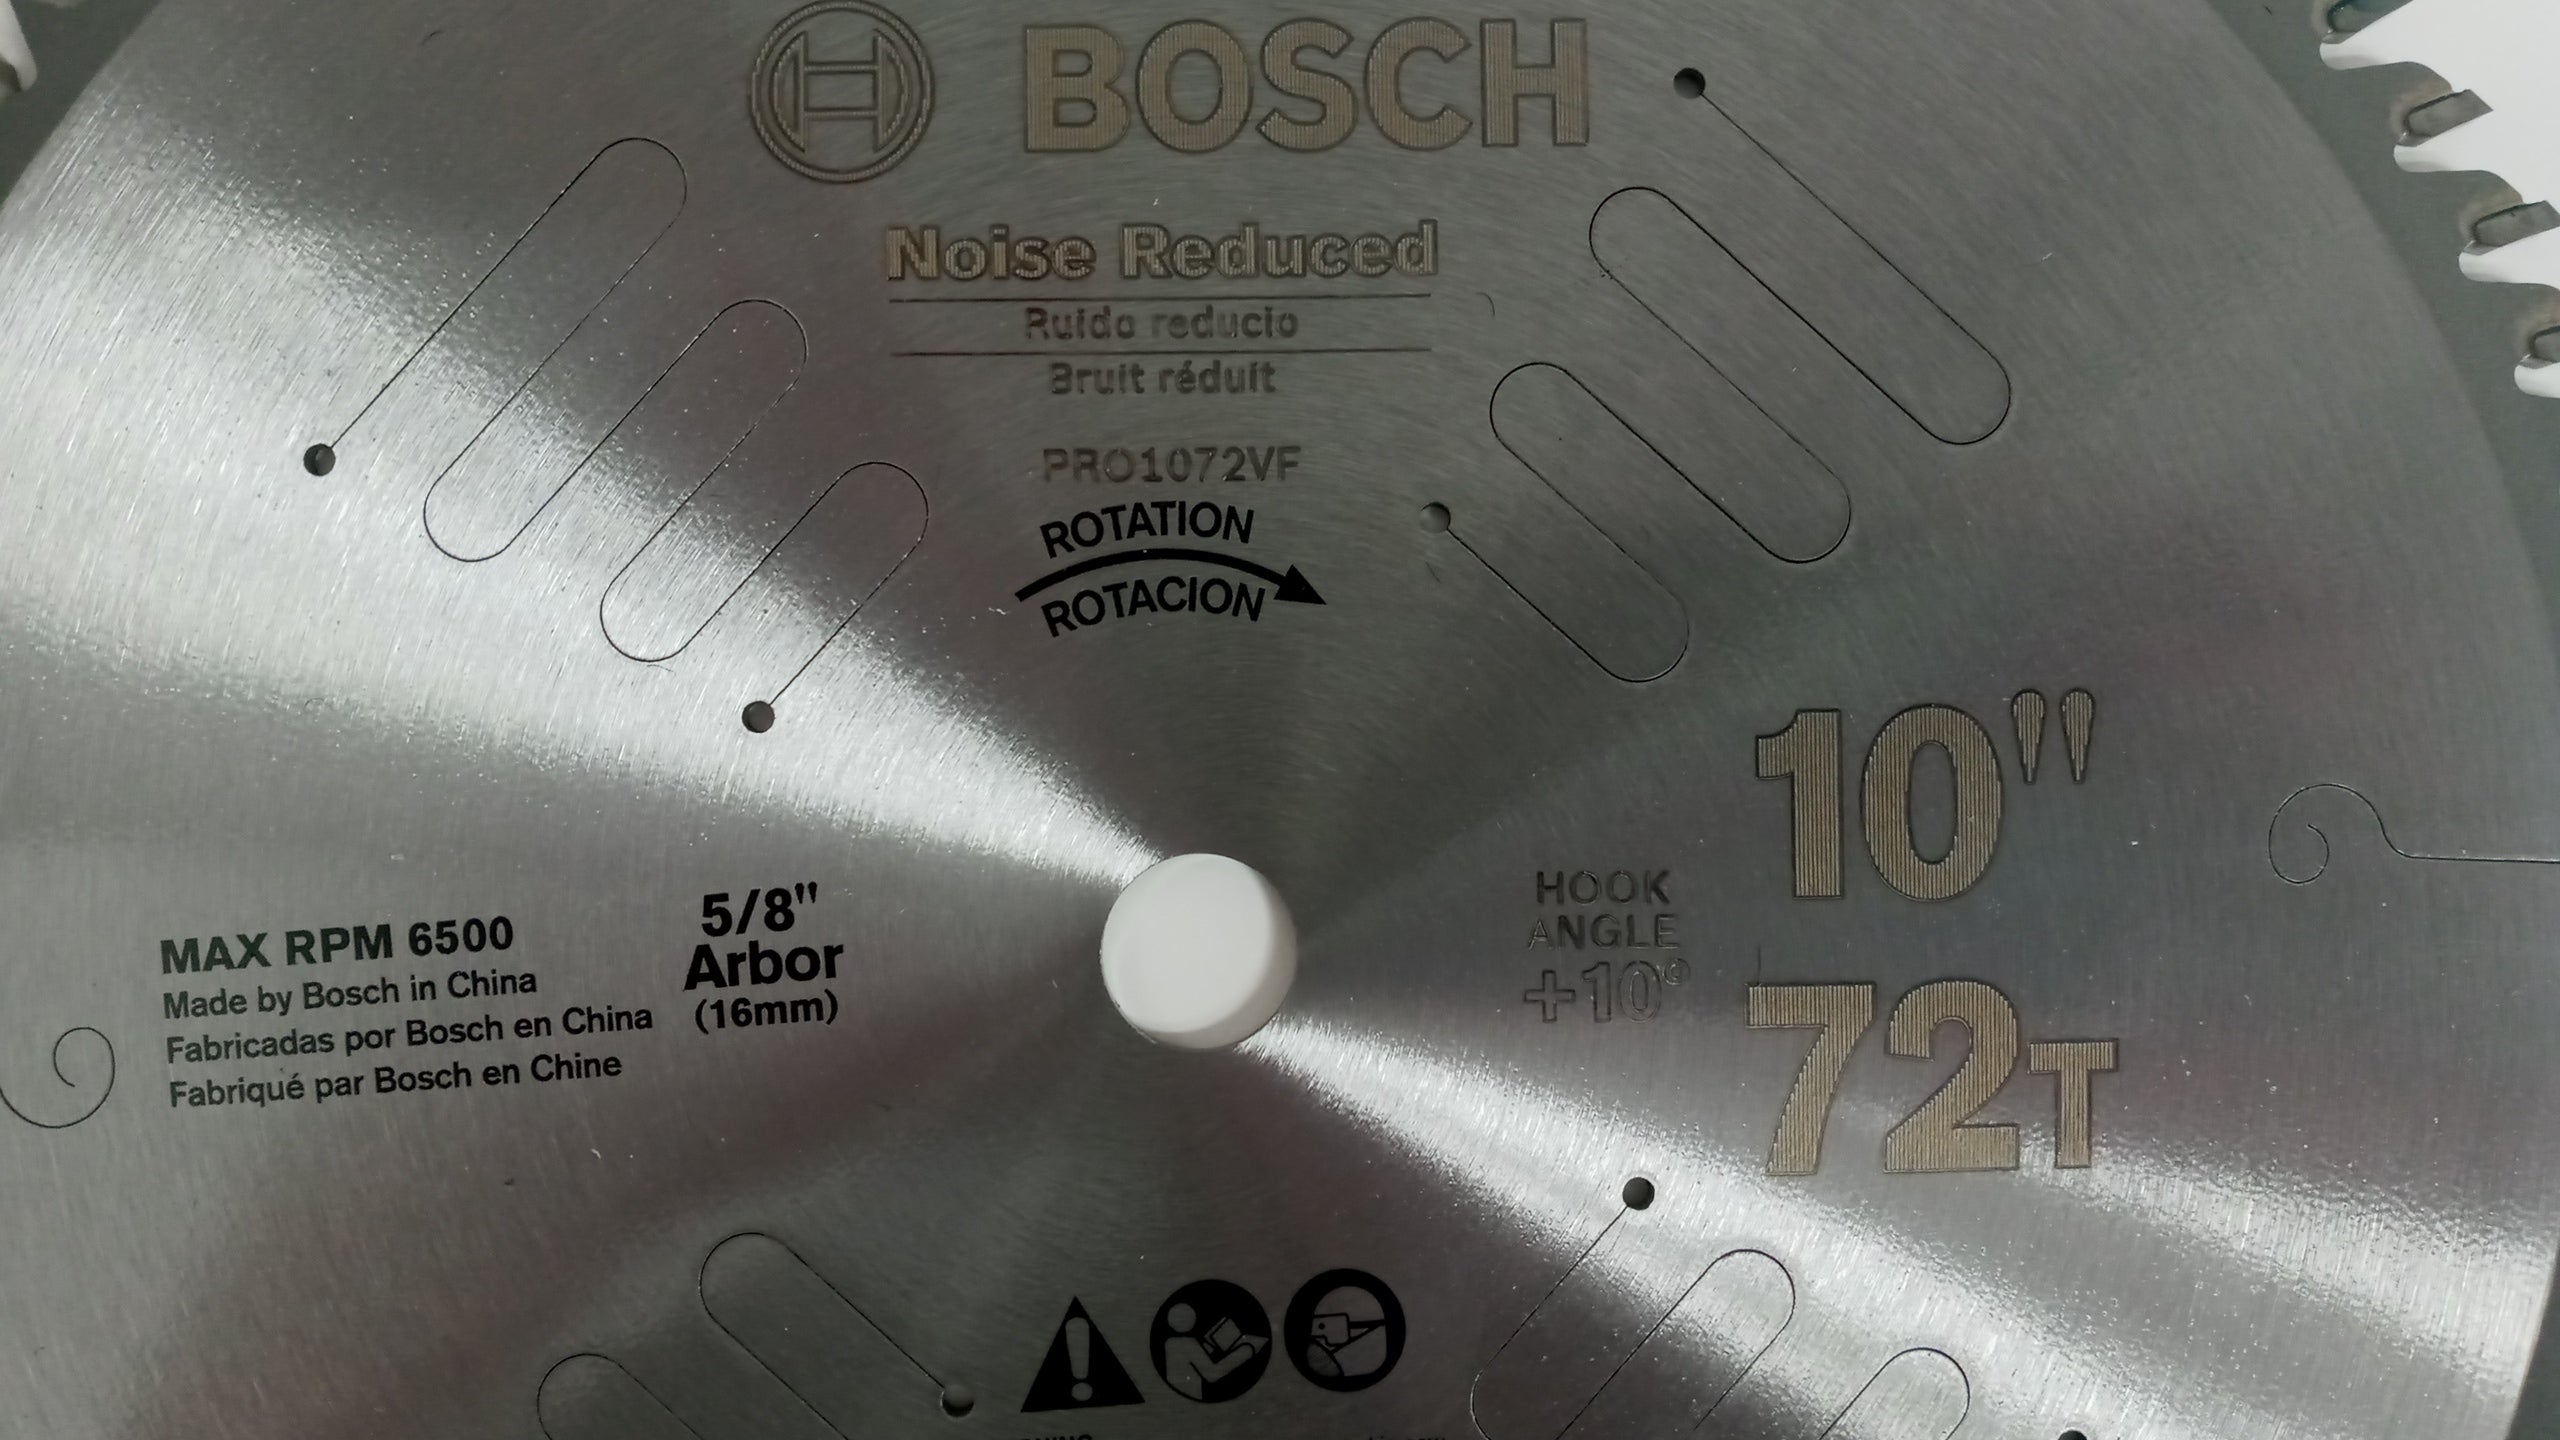 Bosch PRO1072VF 10" x 72 Tooth Carbide Saw Blade Triple Chip